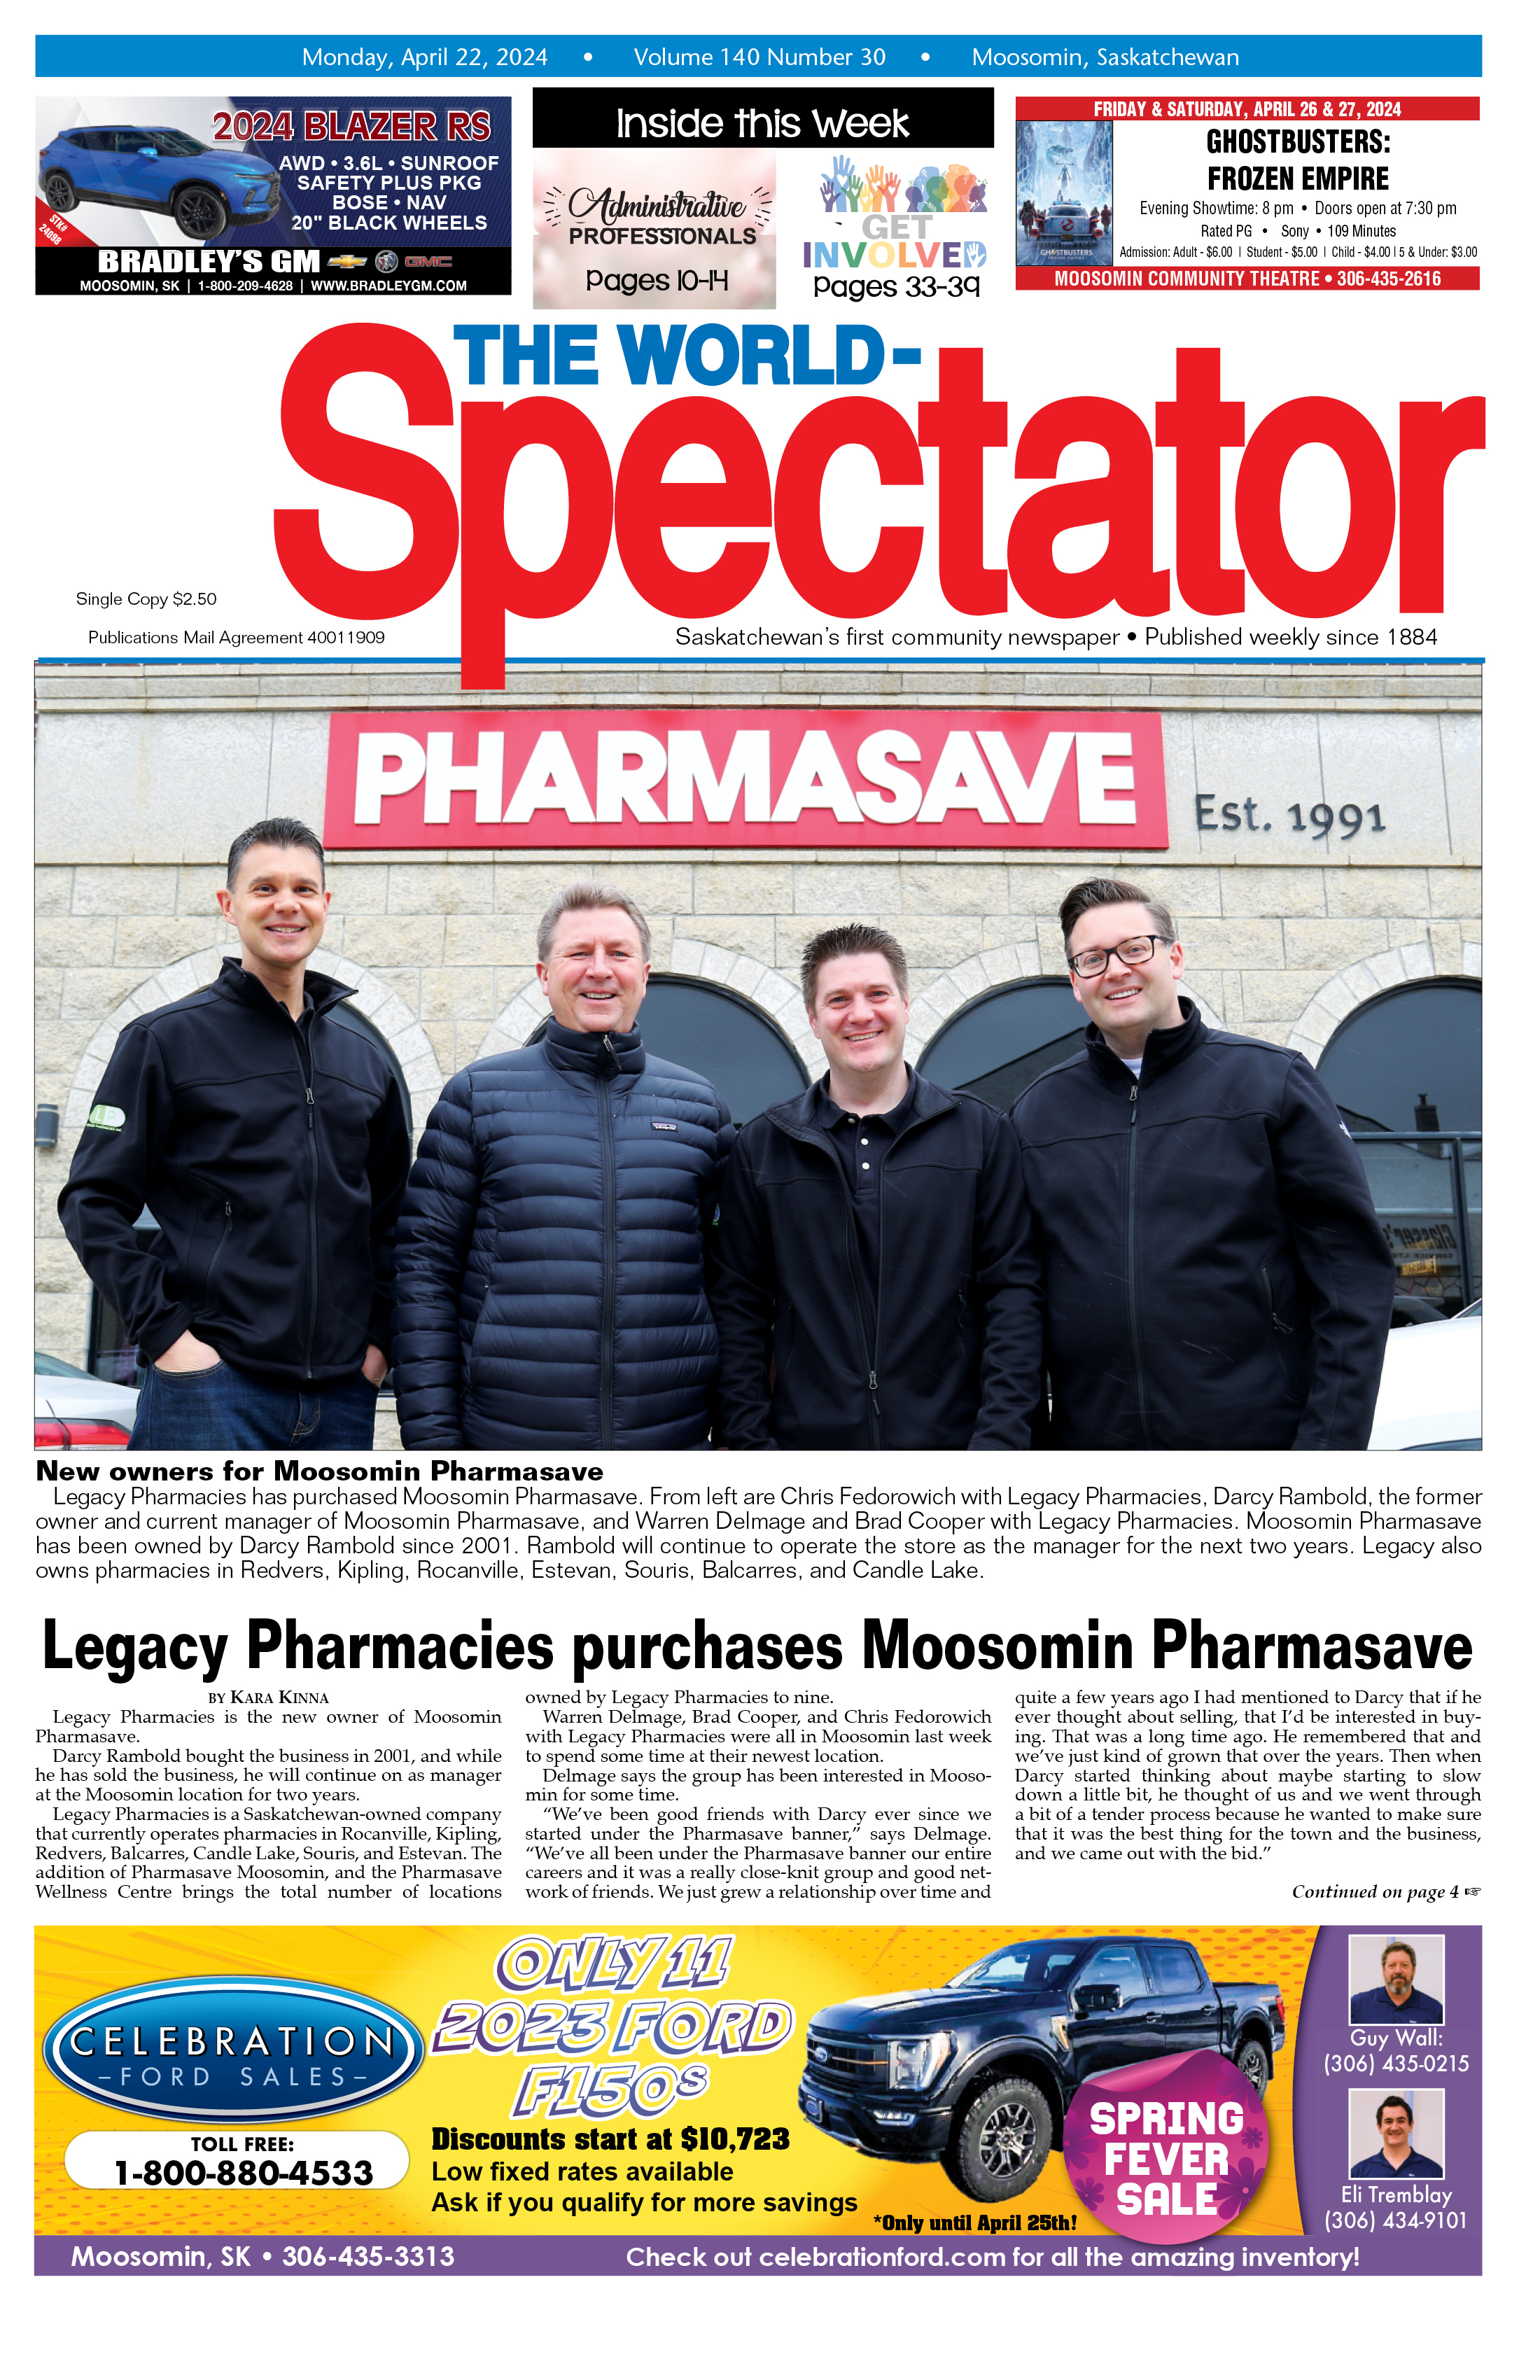 Legacy Pharmacies purchases Moosomin Pharmasave